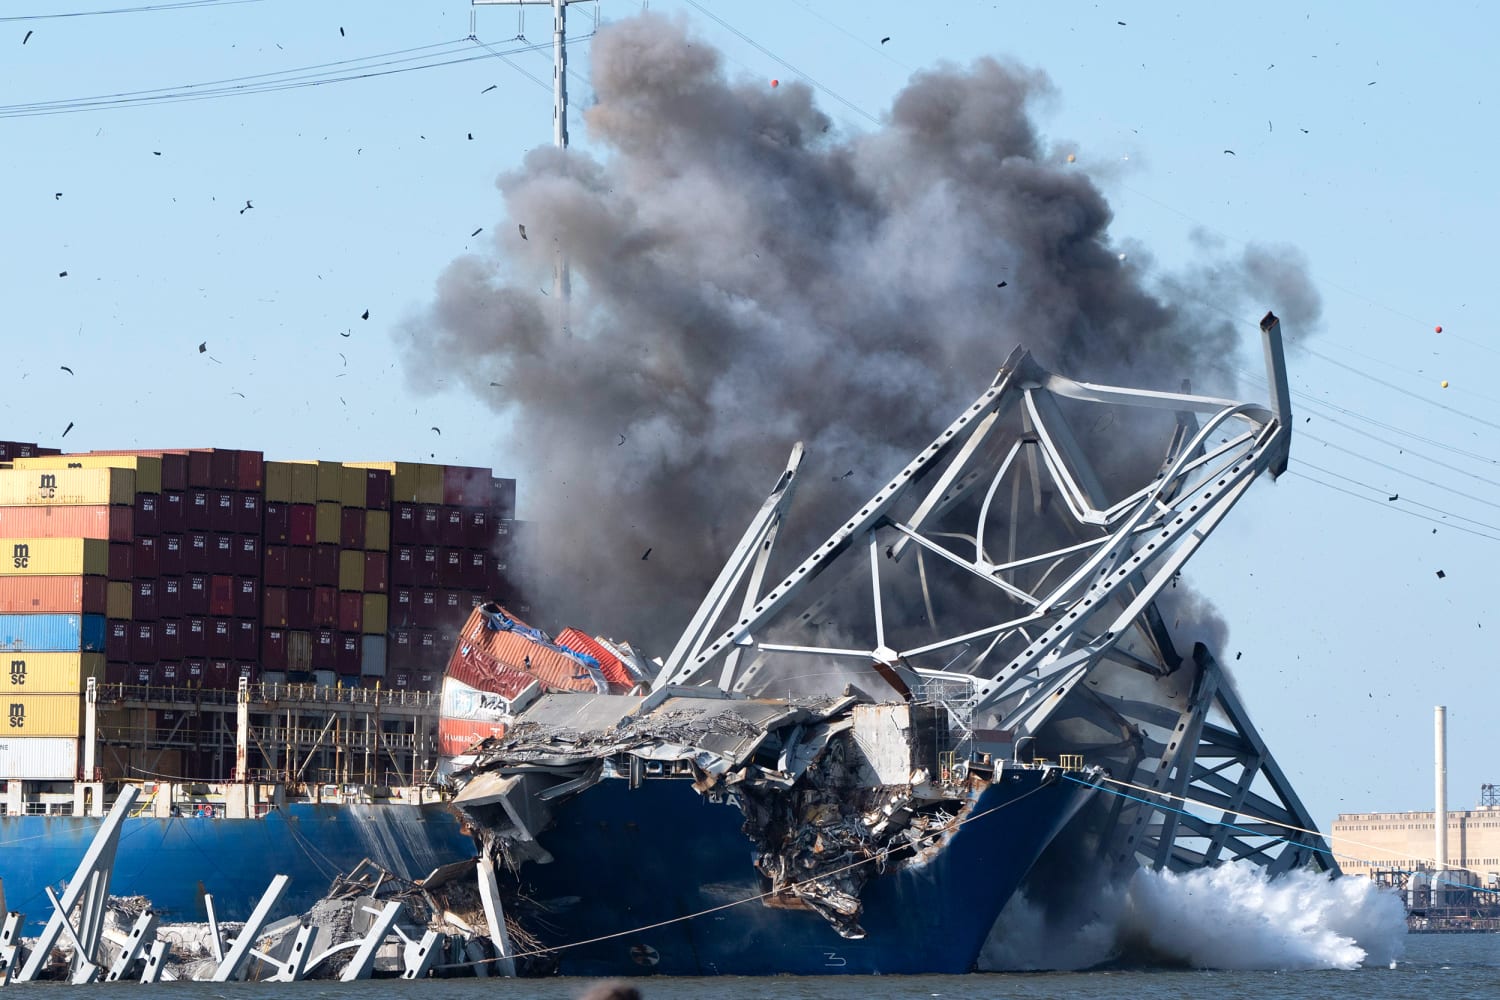 Baltimore Bridge Blast: A Spectacular Display of Demolition